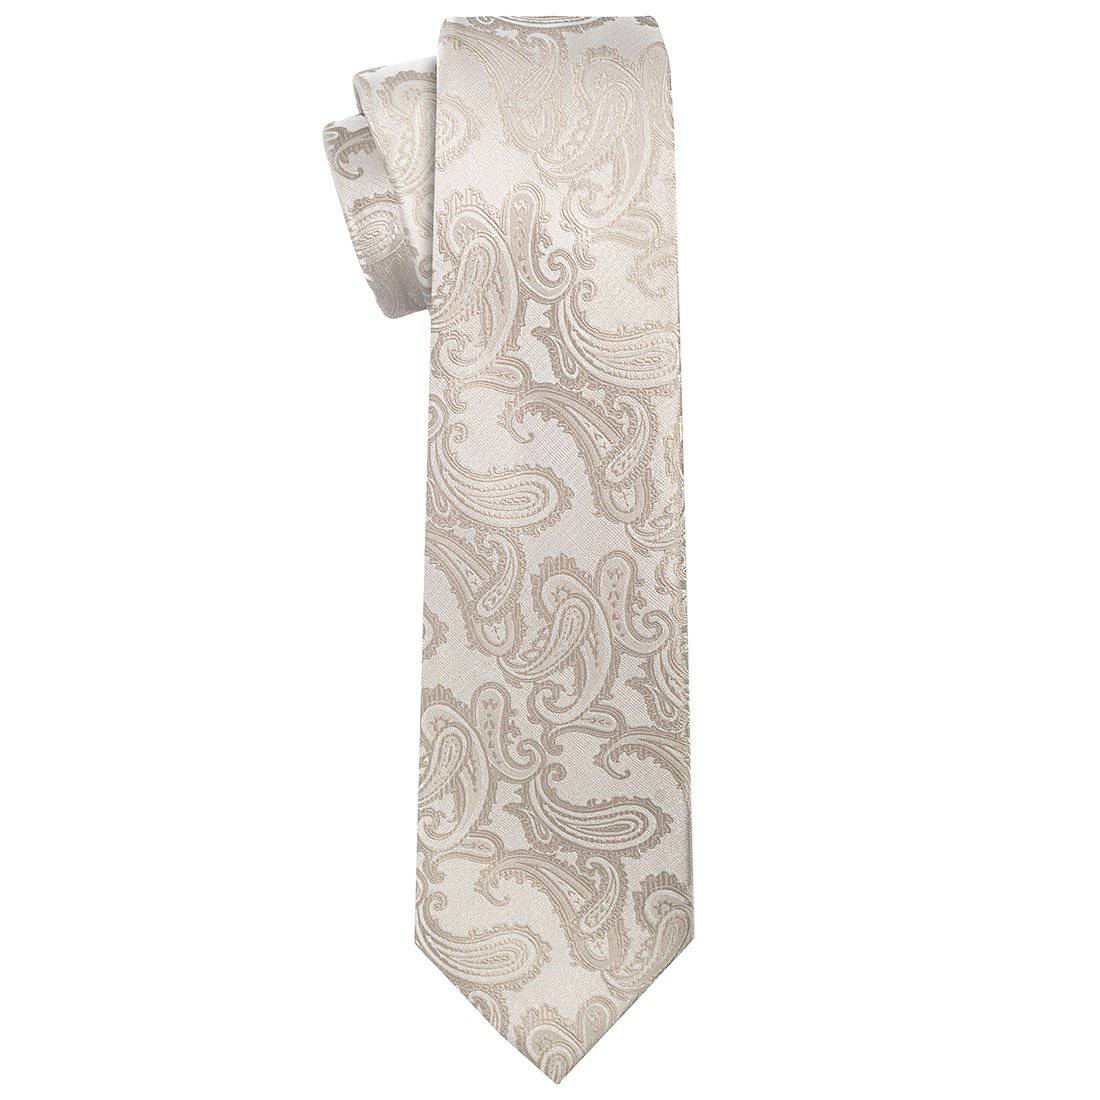 Ivory Paisley Tie - Tie, bowtie, pocket square  | Kissties